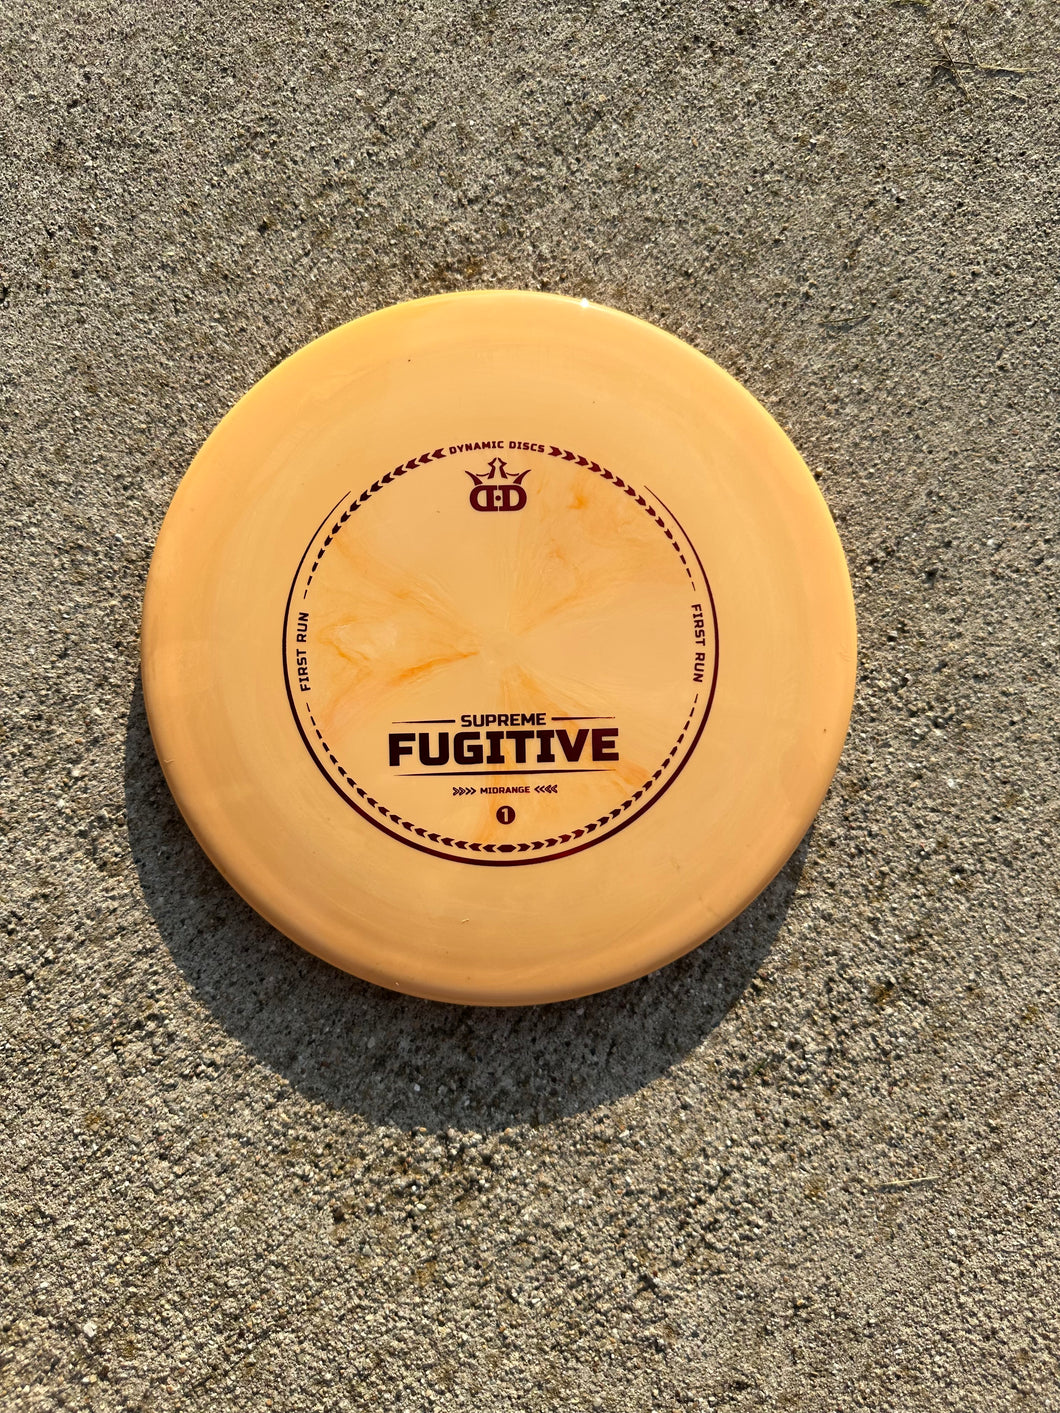 Dynamic Discs Fugitive Midrange 174 yellow